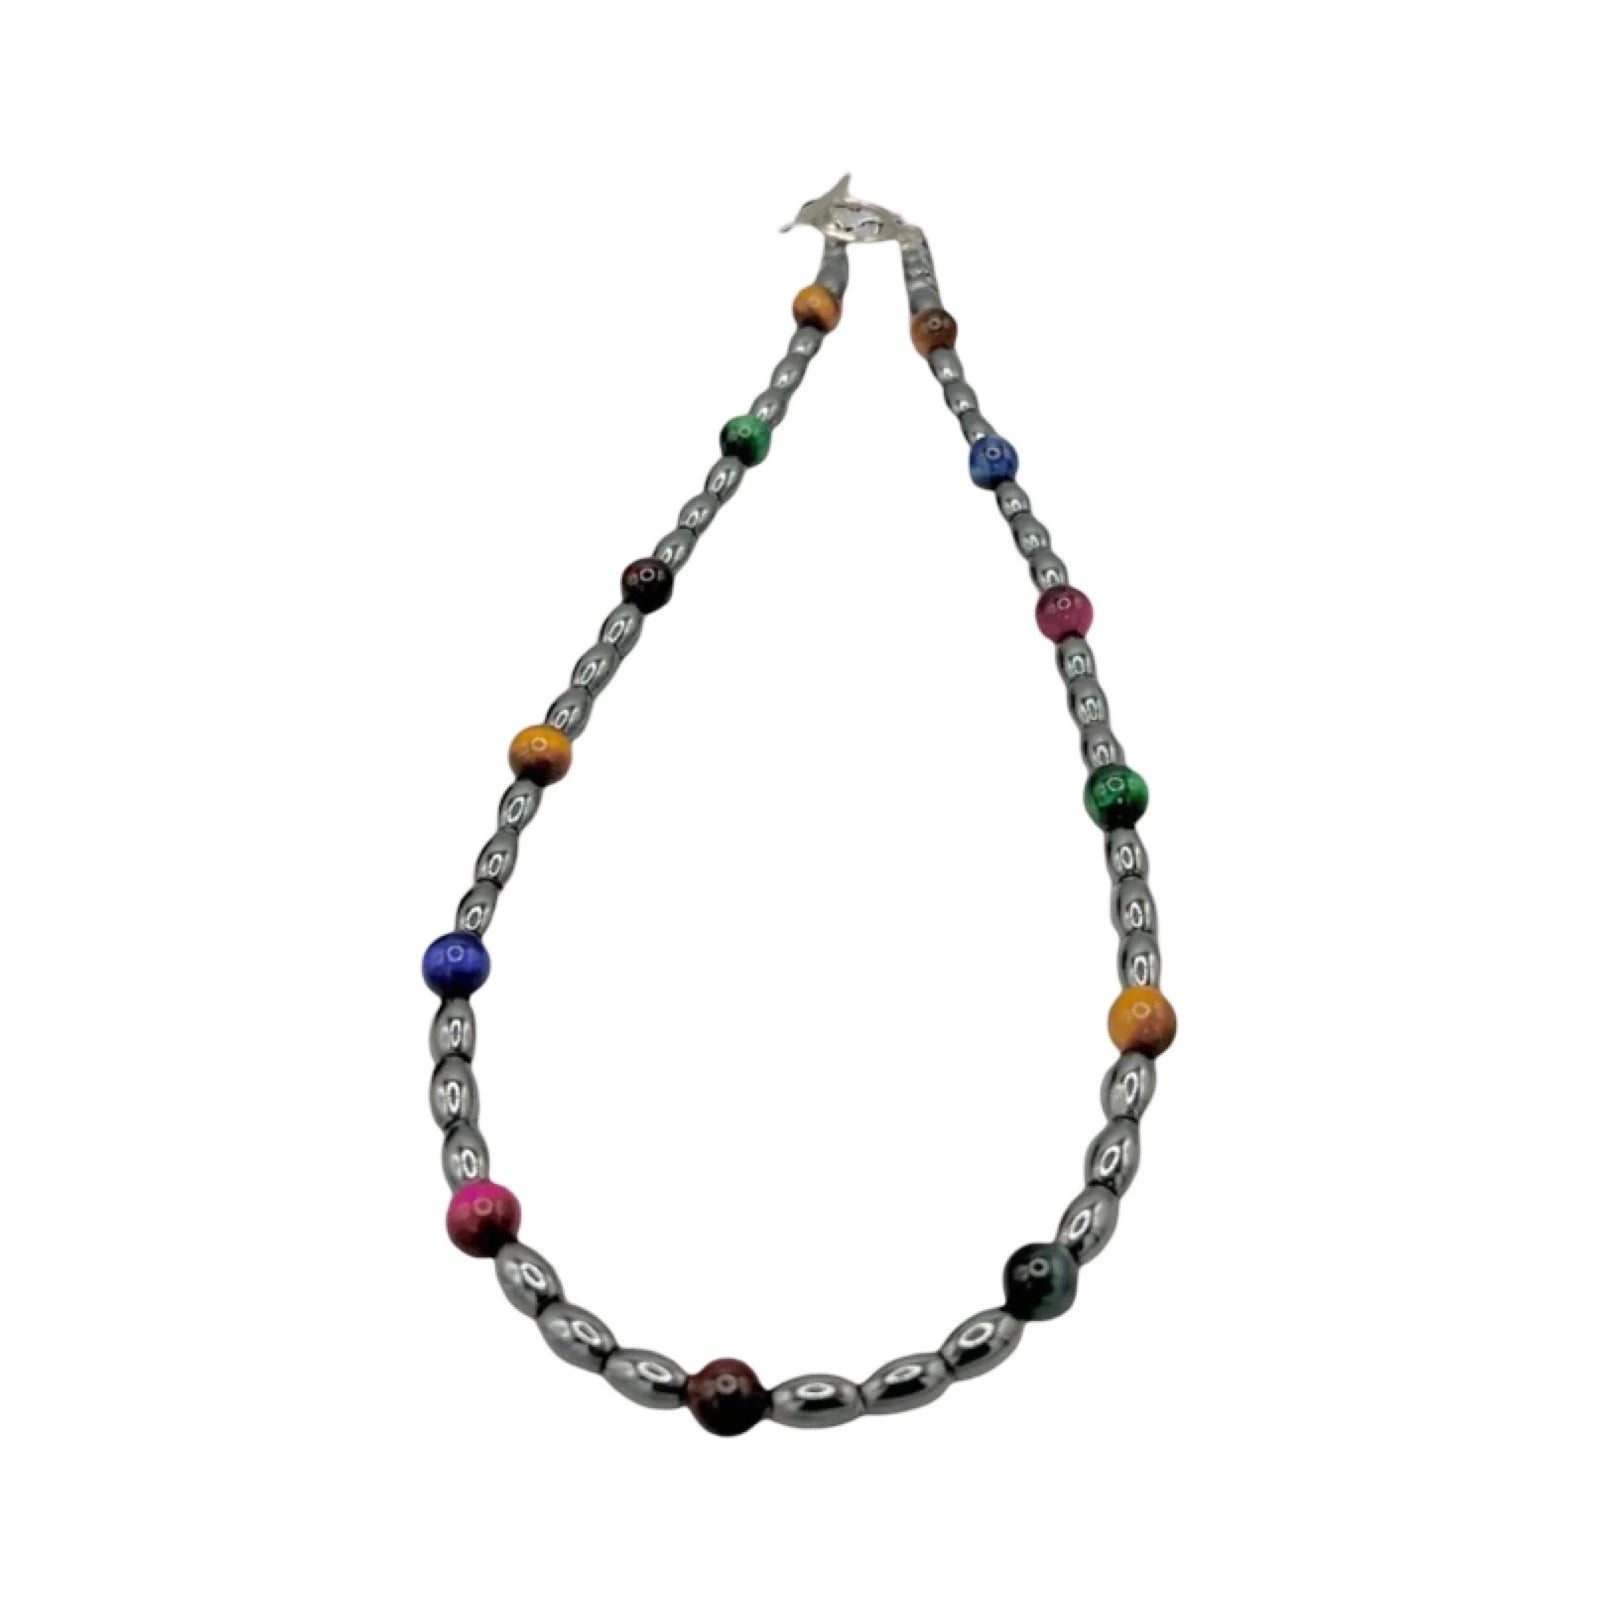 Stunning Hematite Bracelet - Elegant Jewelry Piece